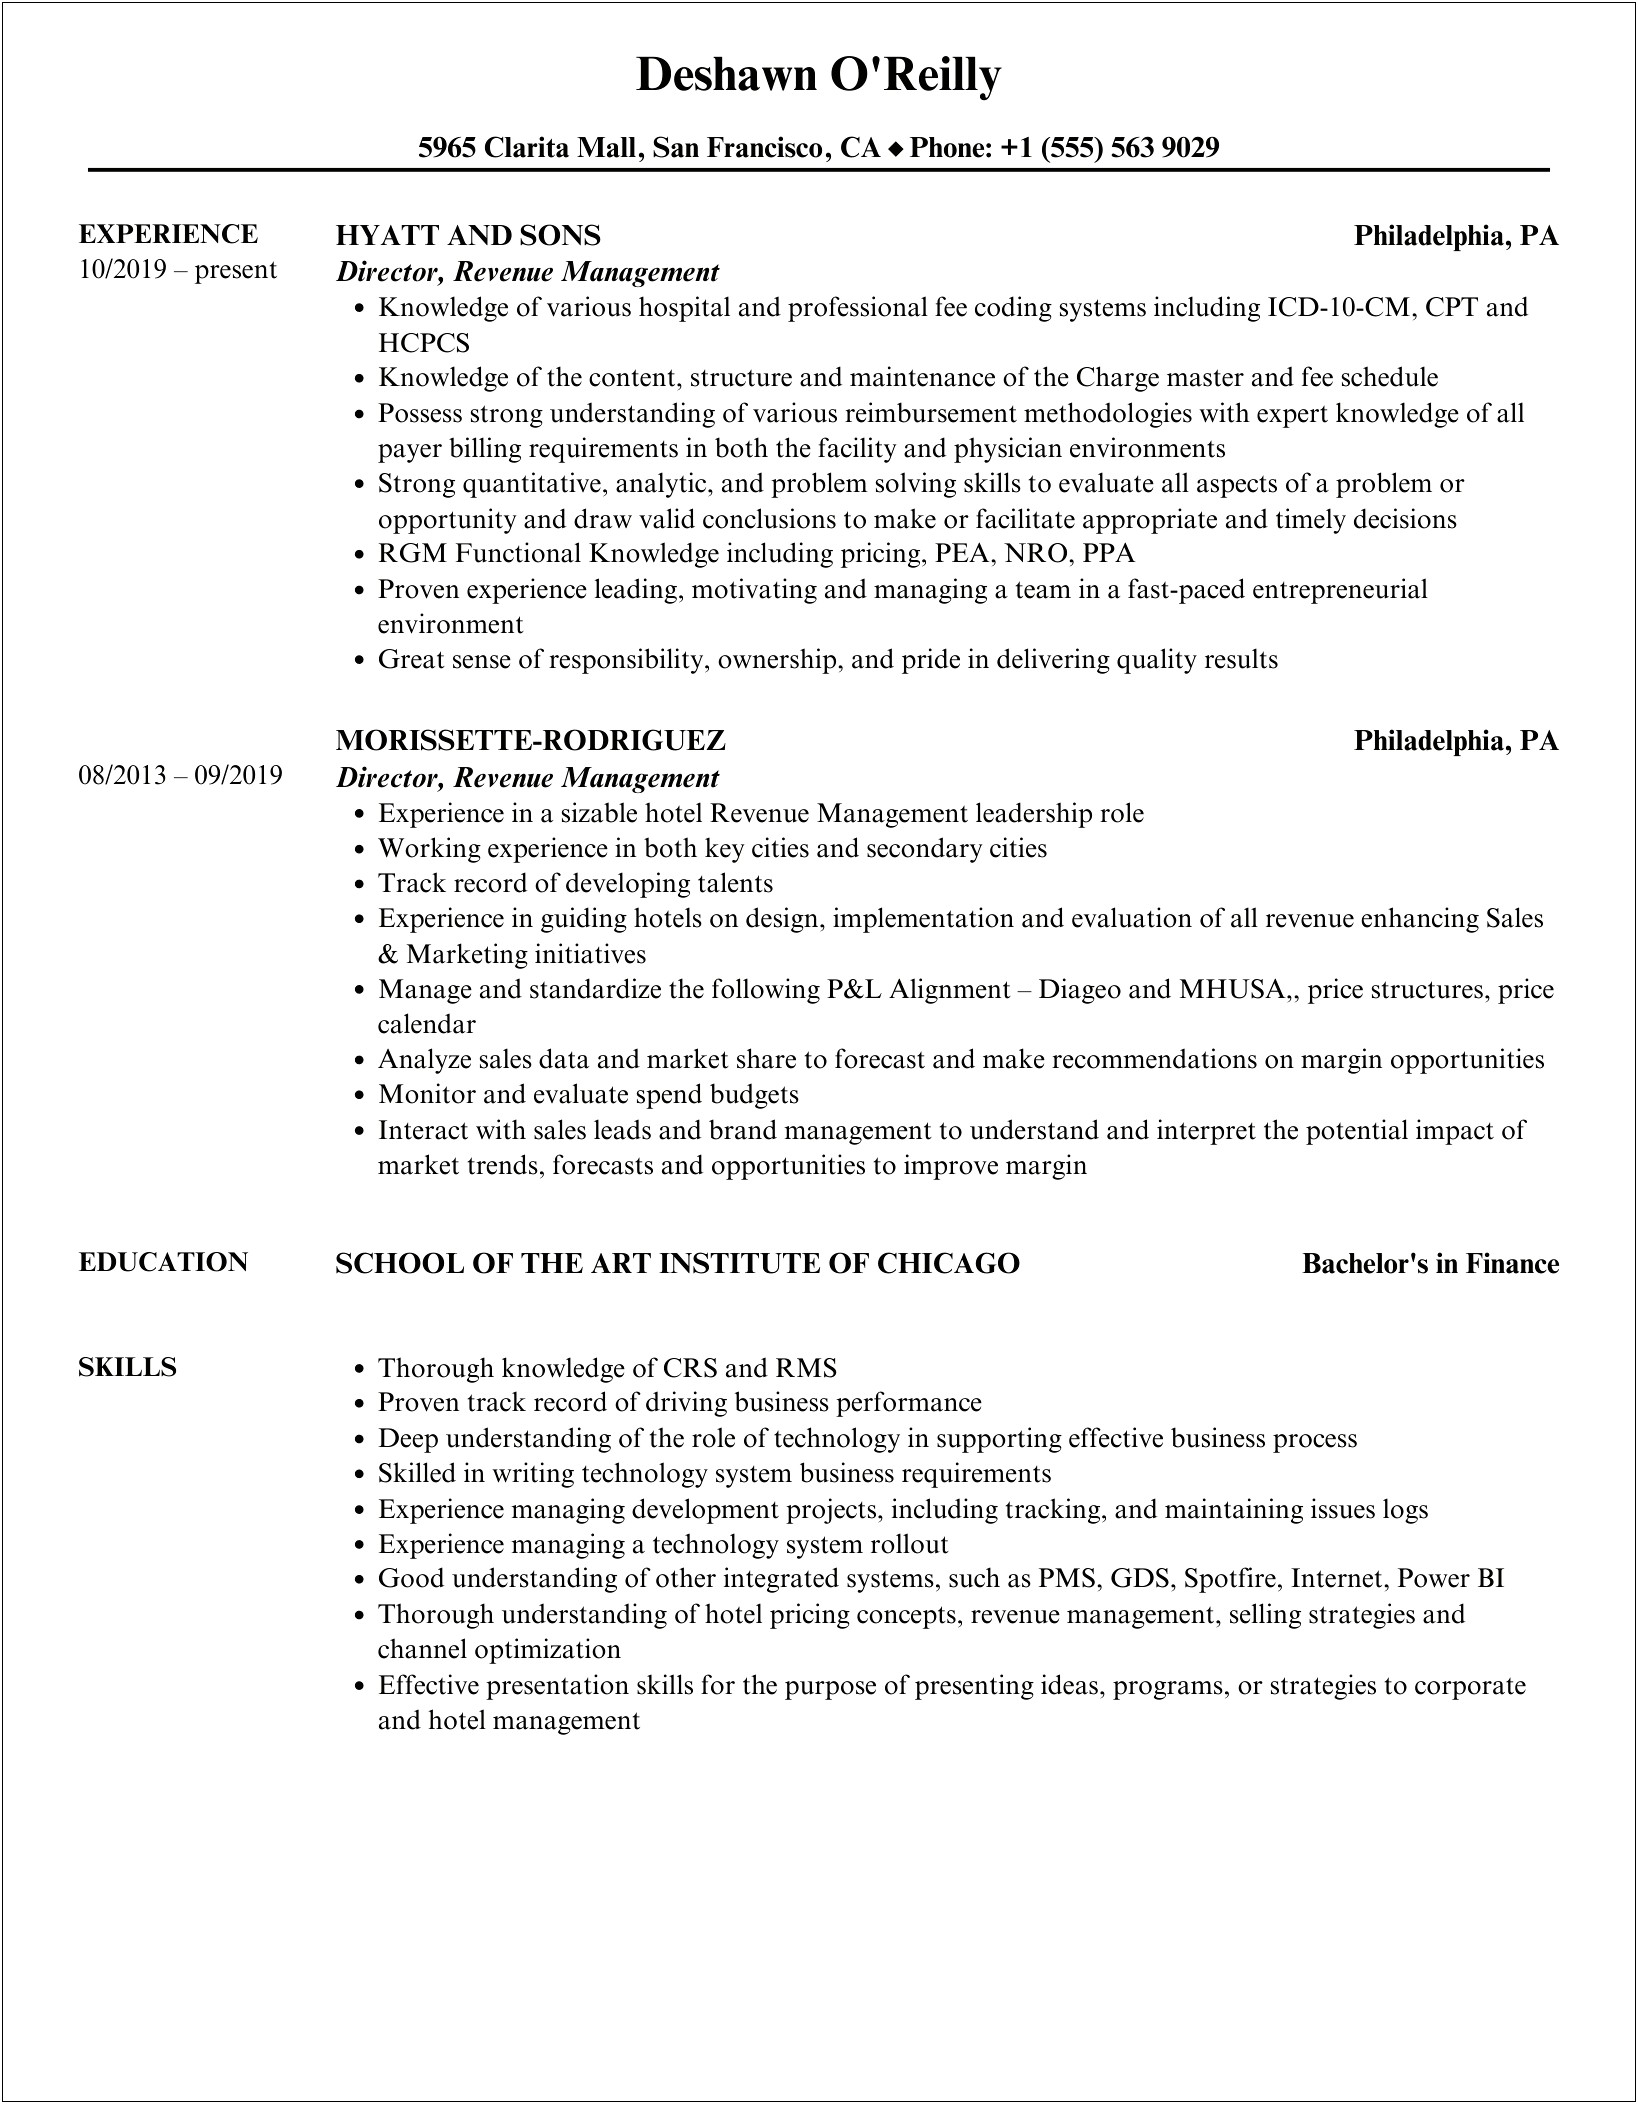 Sample Resume Of Corporate Director Of Revenue Management